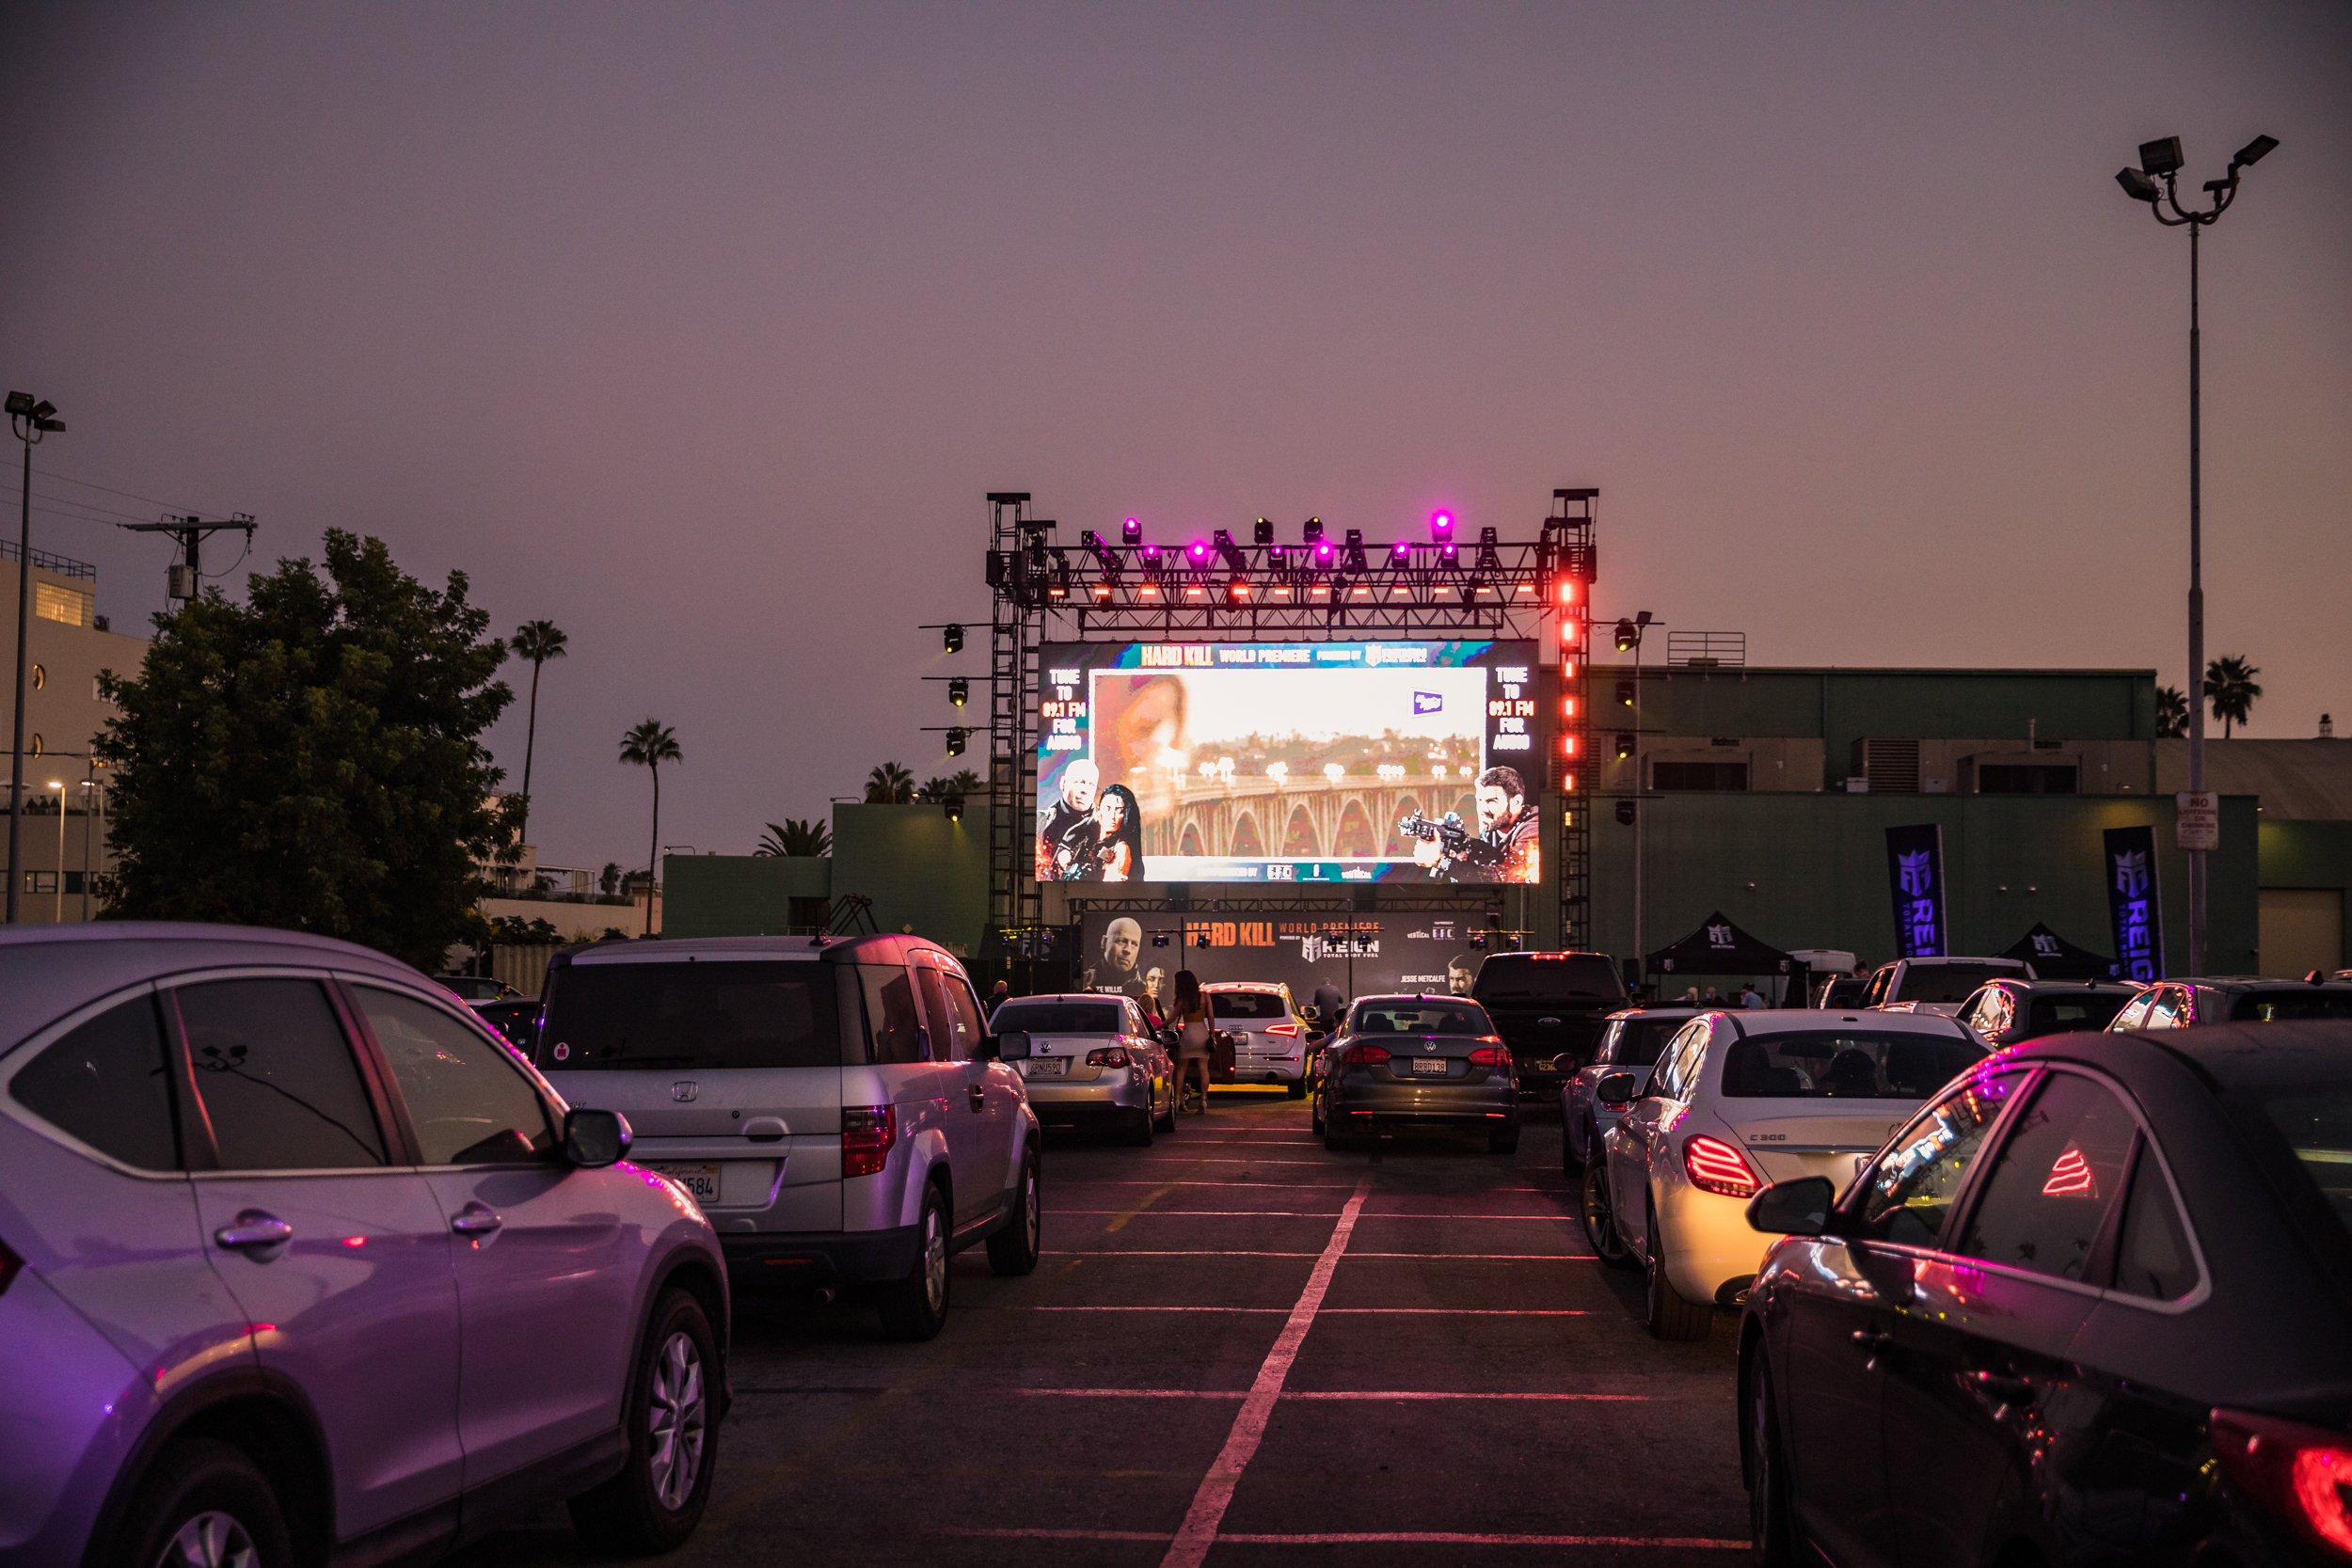 Rows of cars twilight Hollywood Palladiums Hard Kill movie premiere